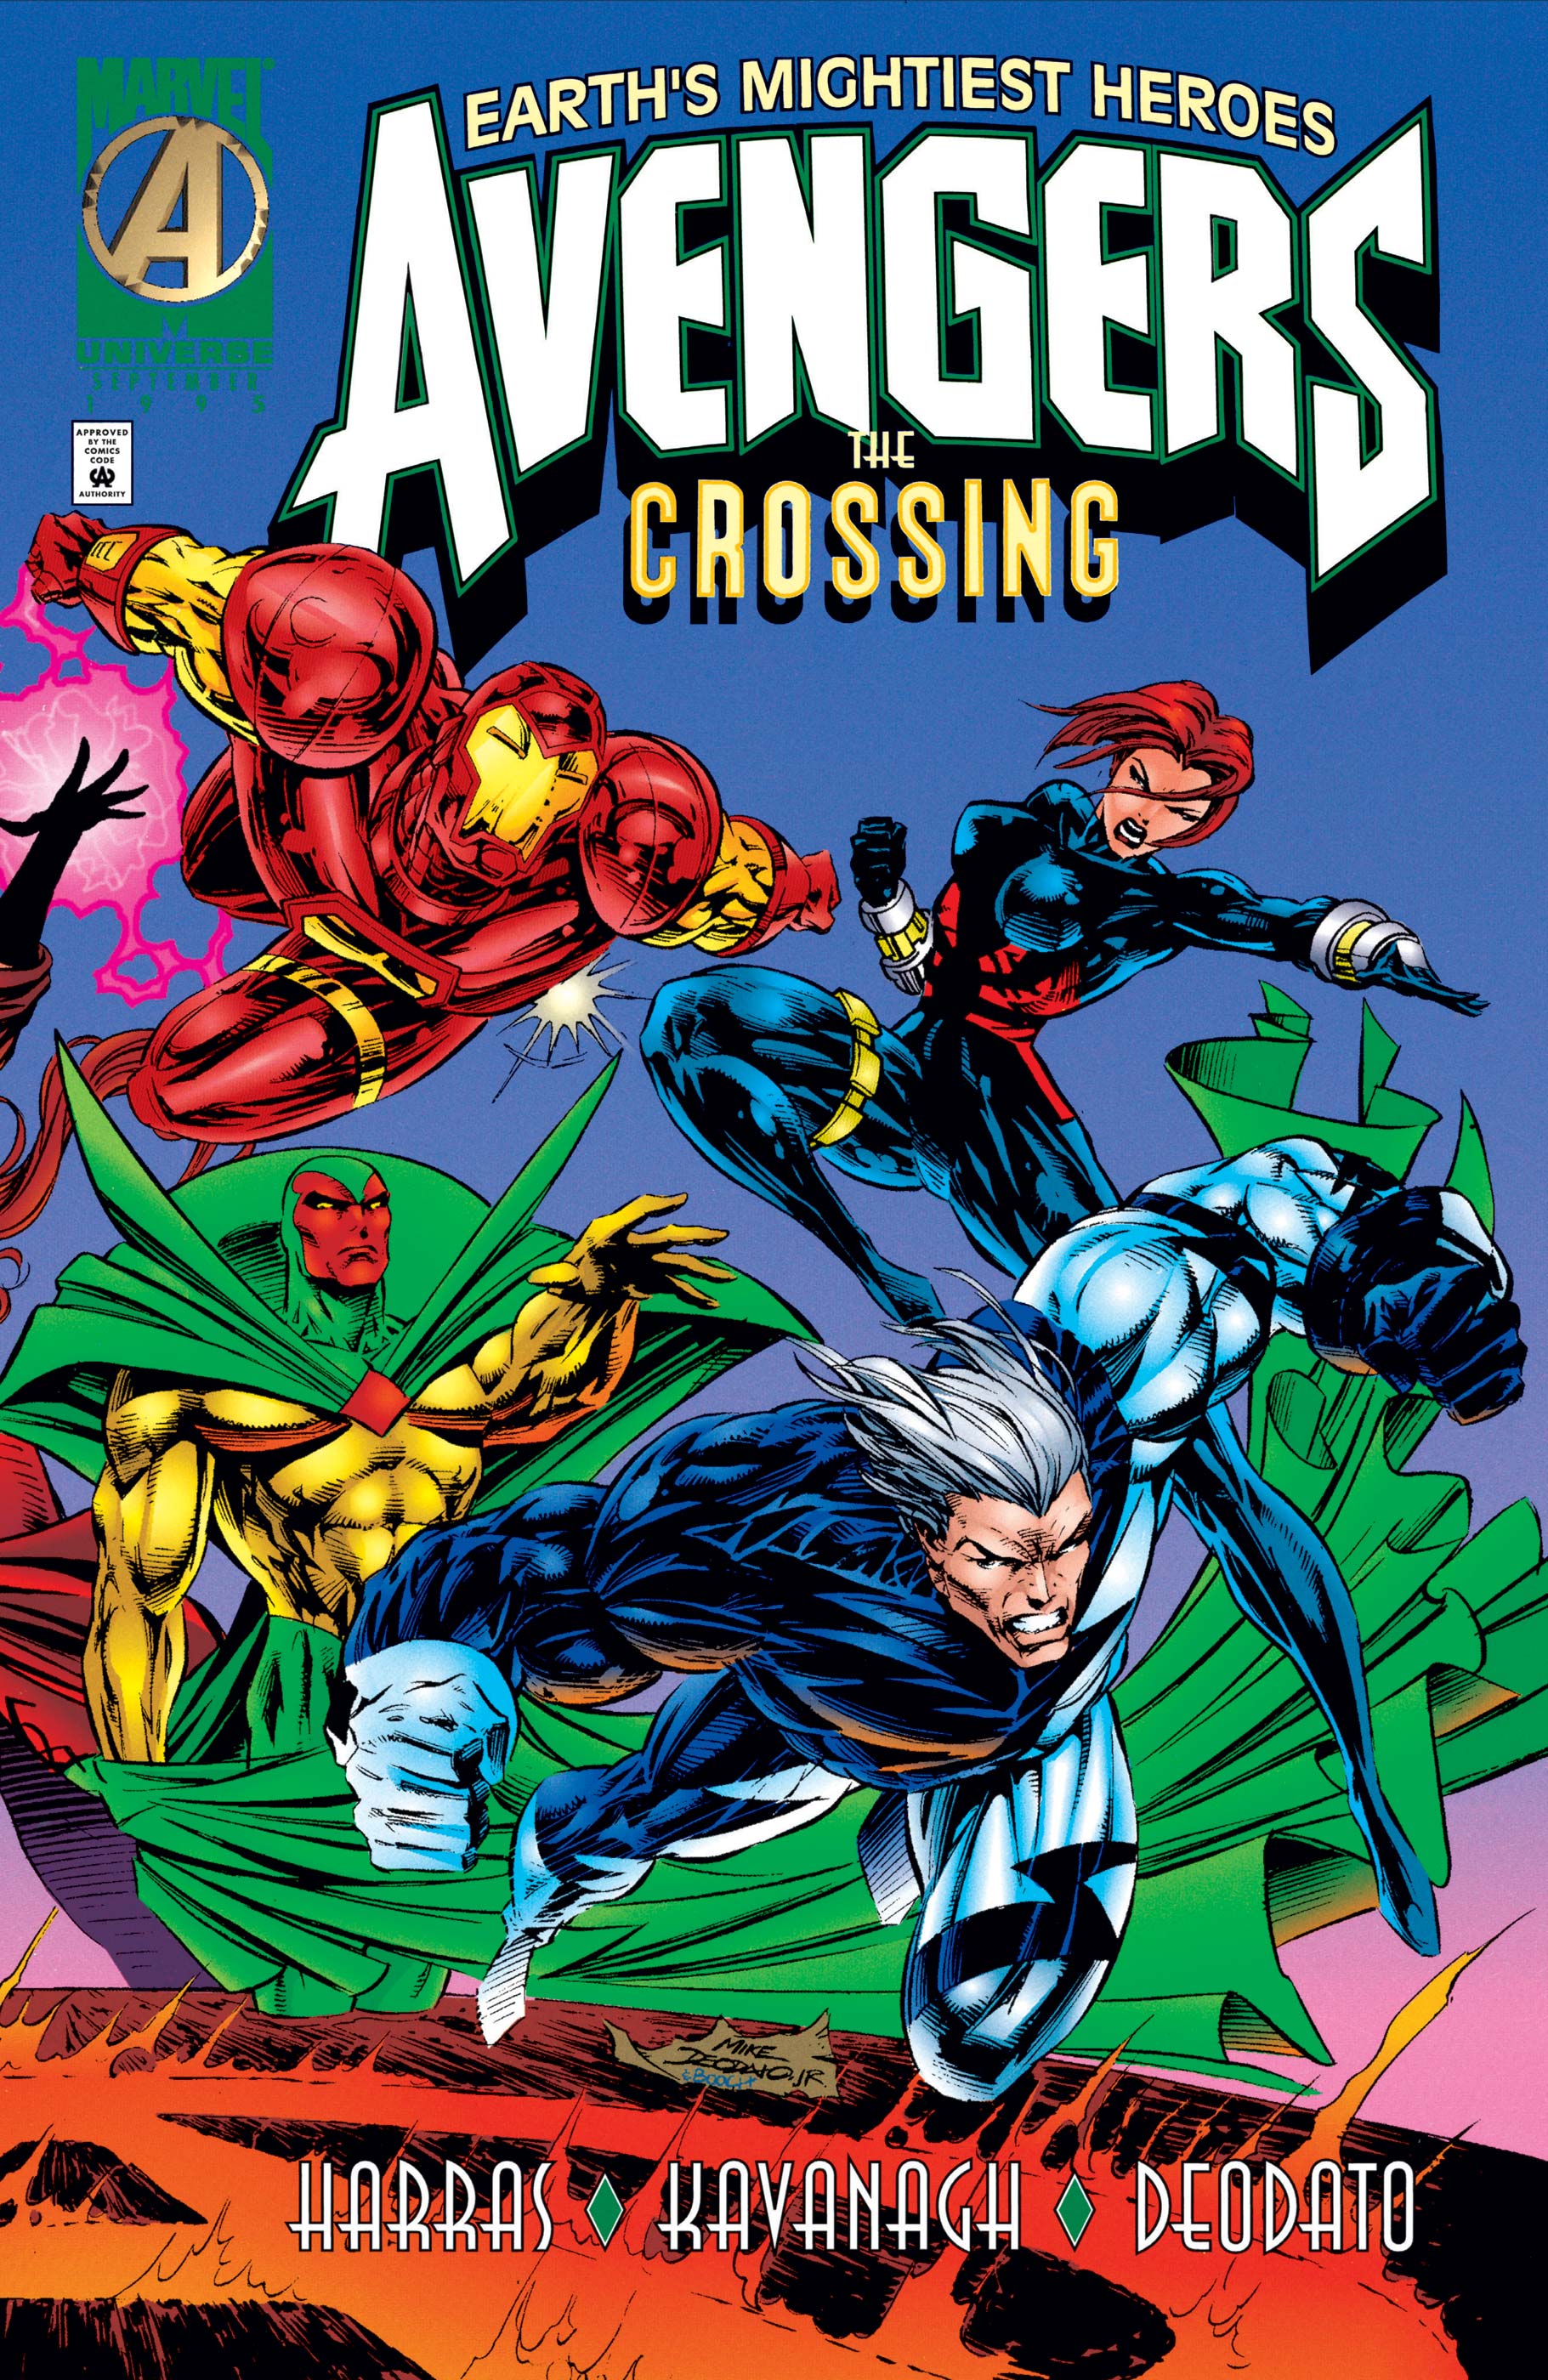 Avengers: The Crossing (1995) #1